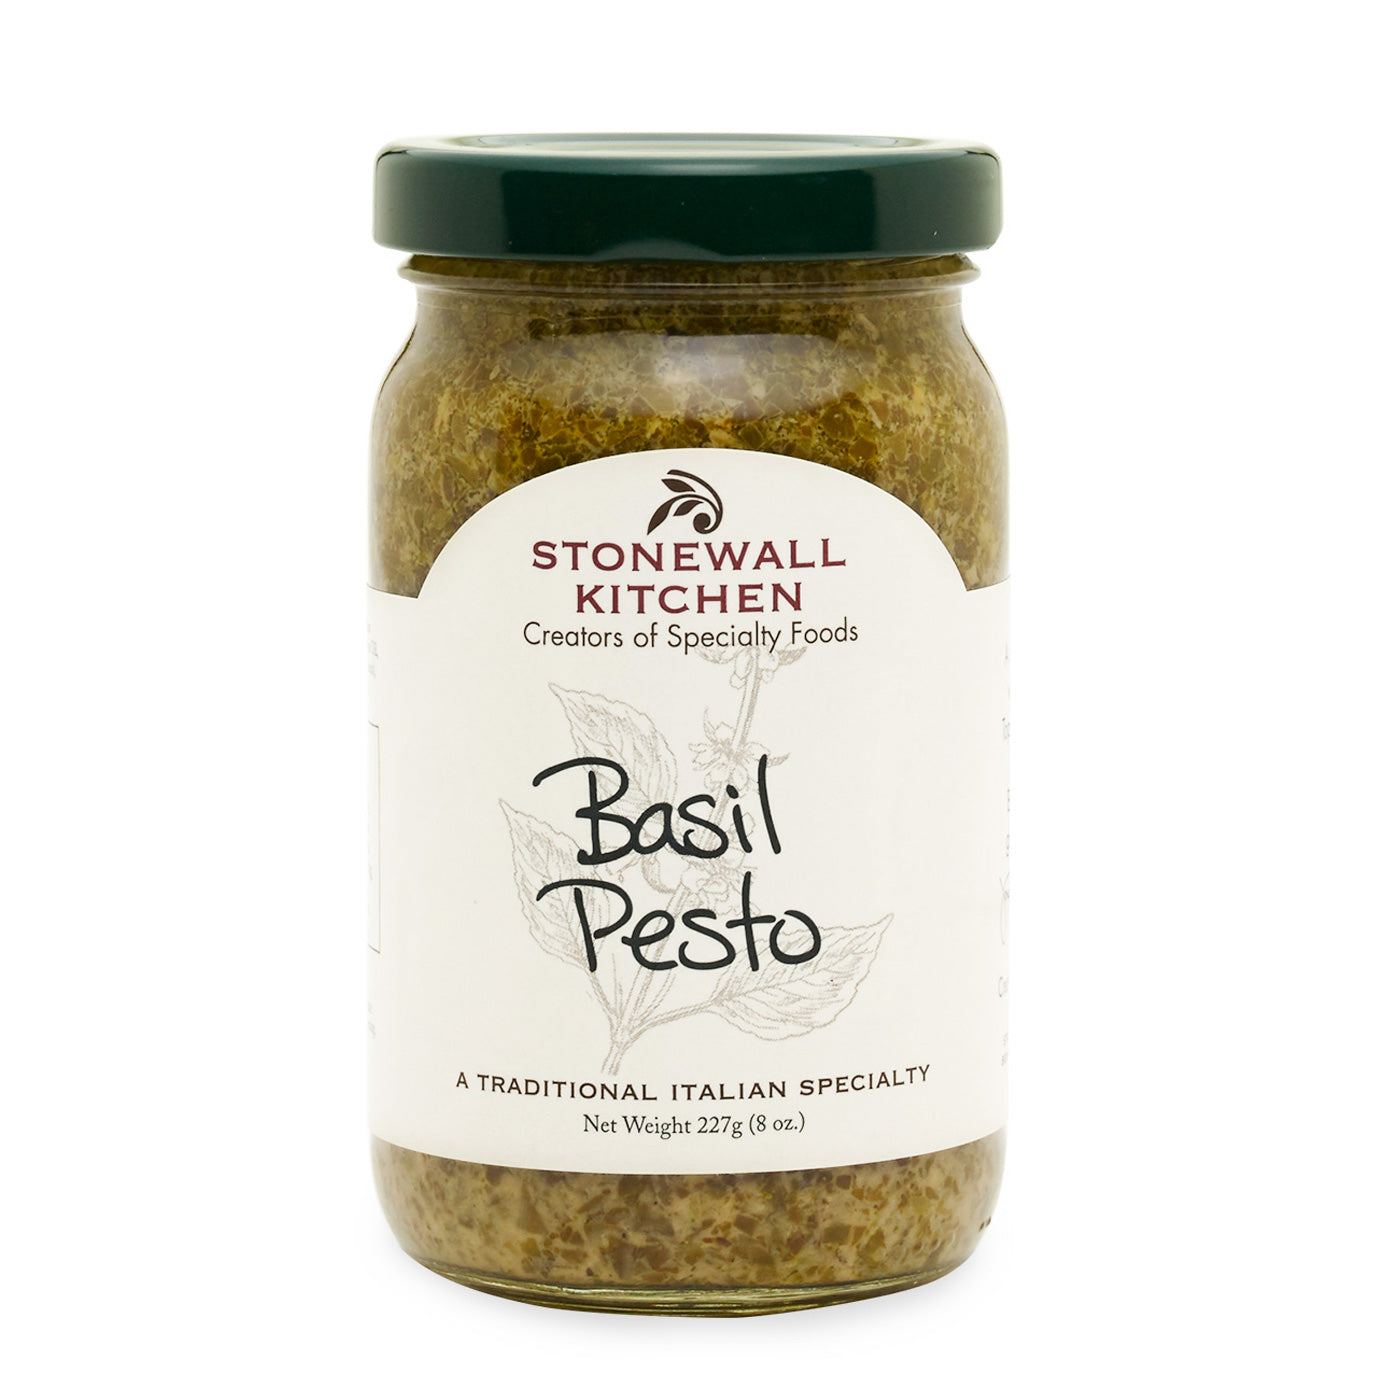 Stonewall Basil Pesto - Olive Oil Etcetera 